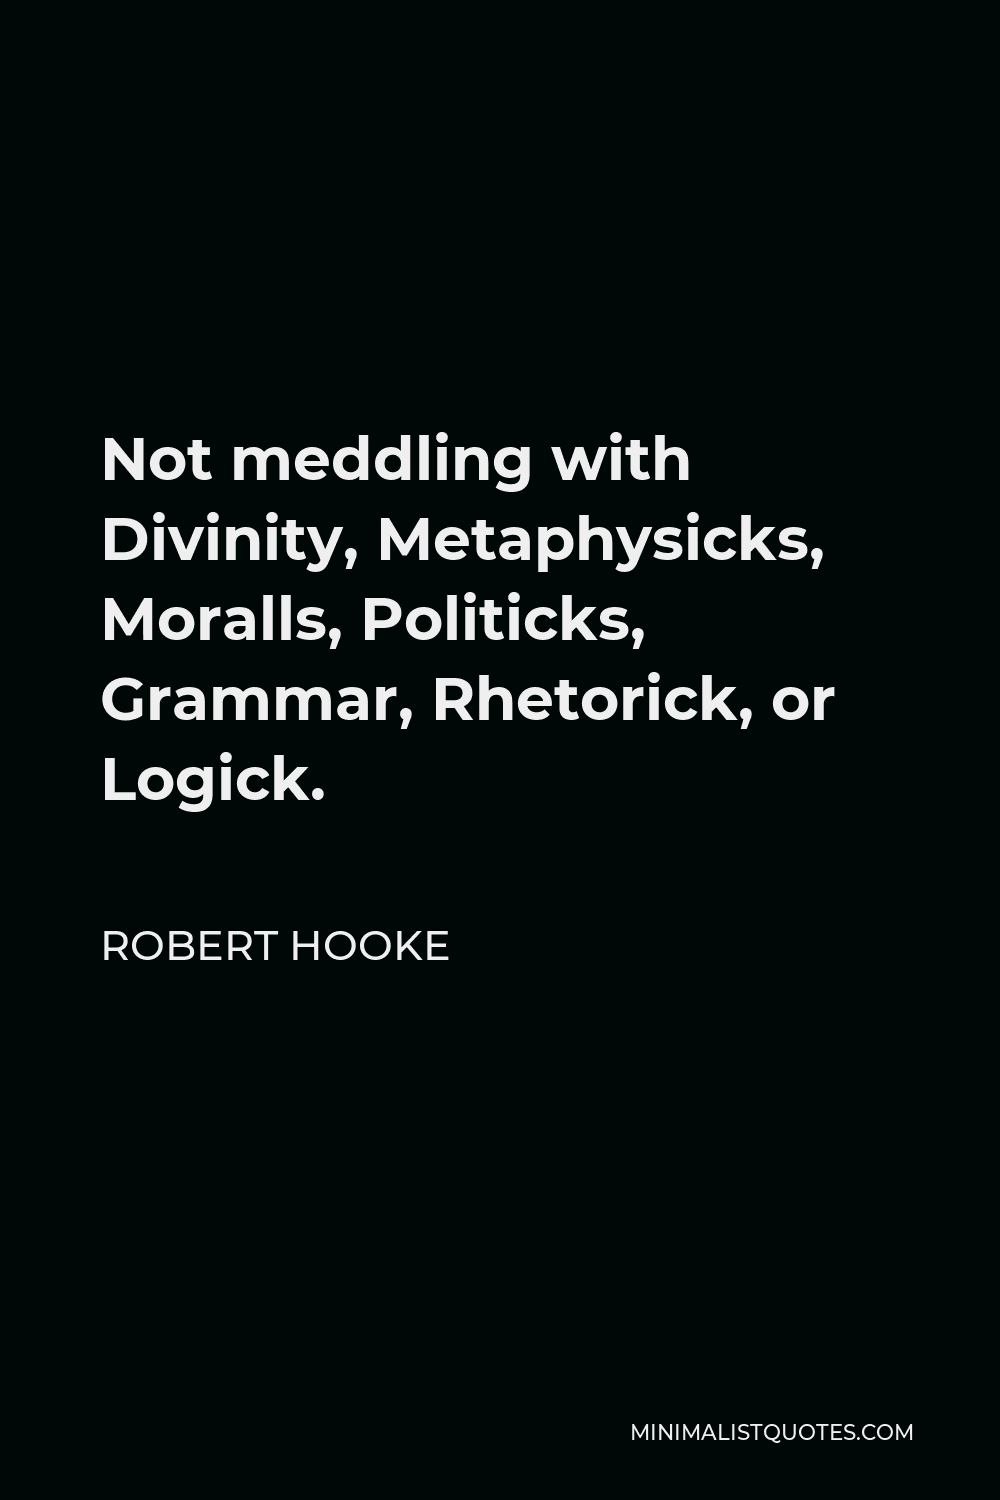 Robert Hooke Quote - Not meddling with Divinity, Metaphysicks, Moralls, Politicks, Grammar, Rhetorick, or Logick.